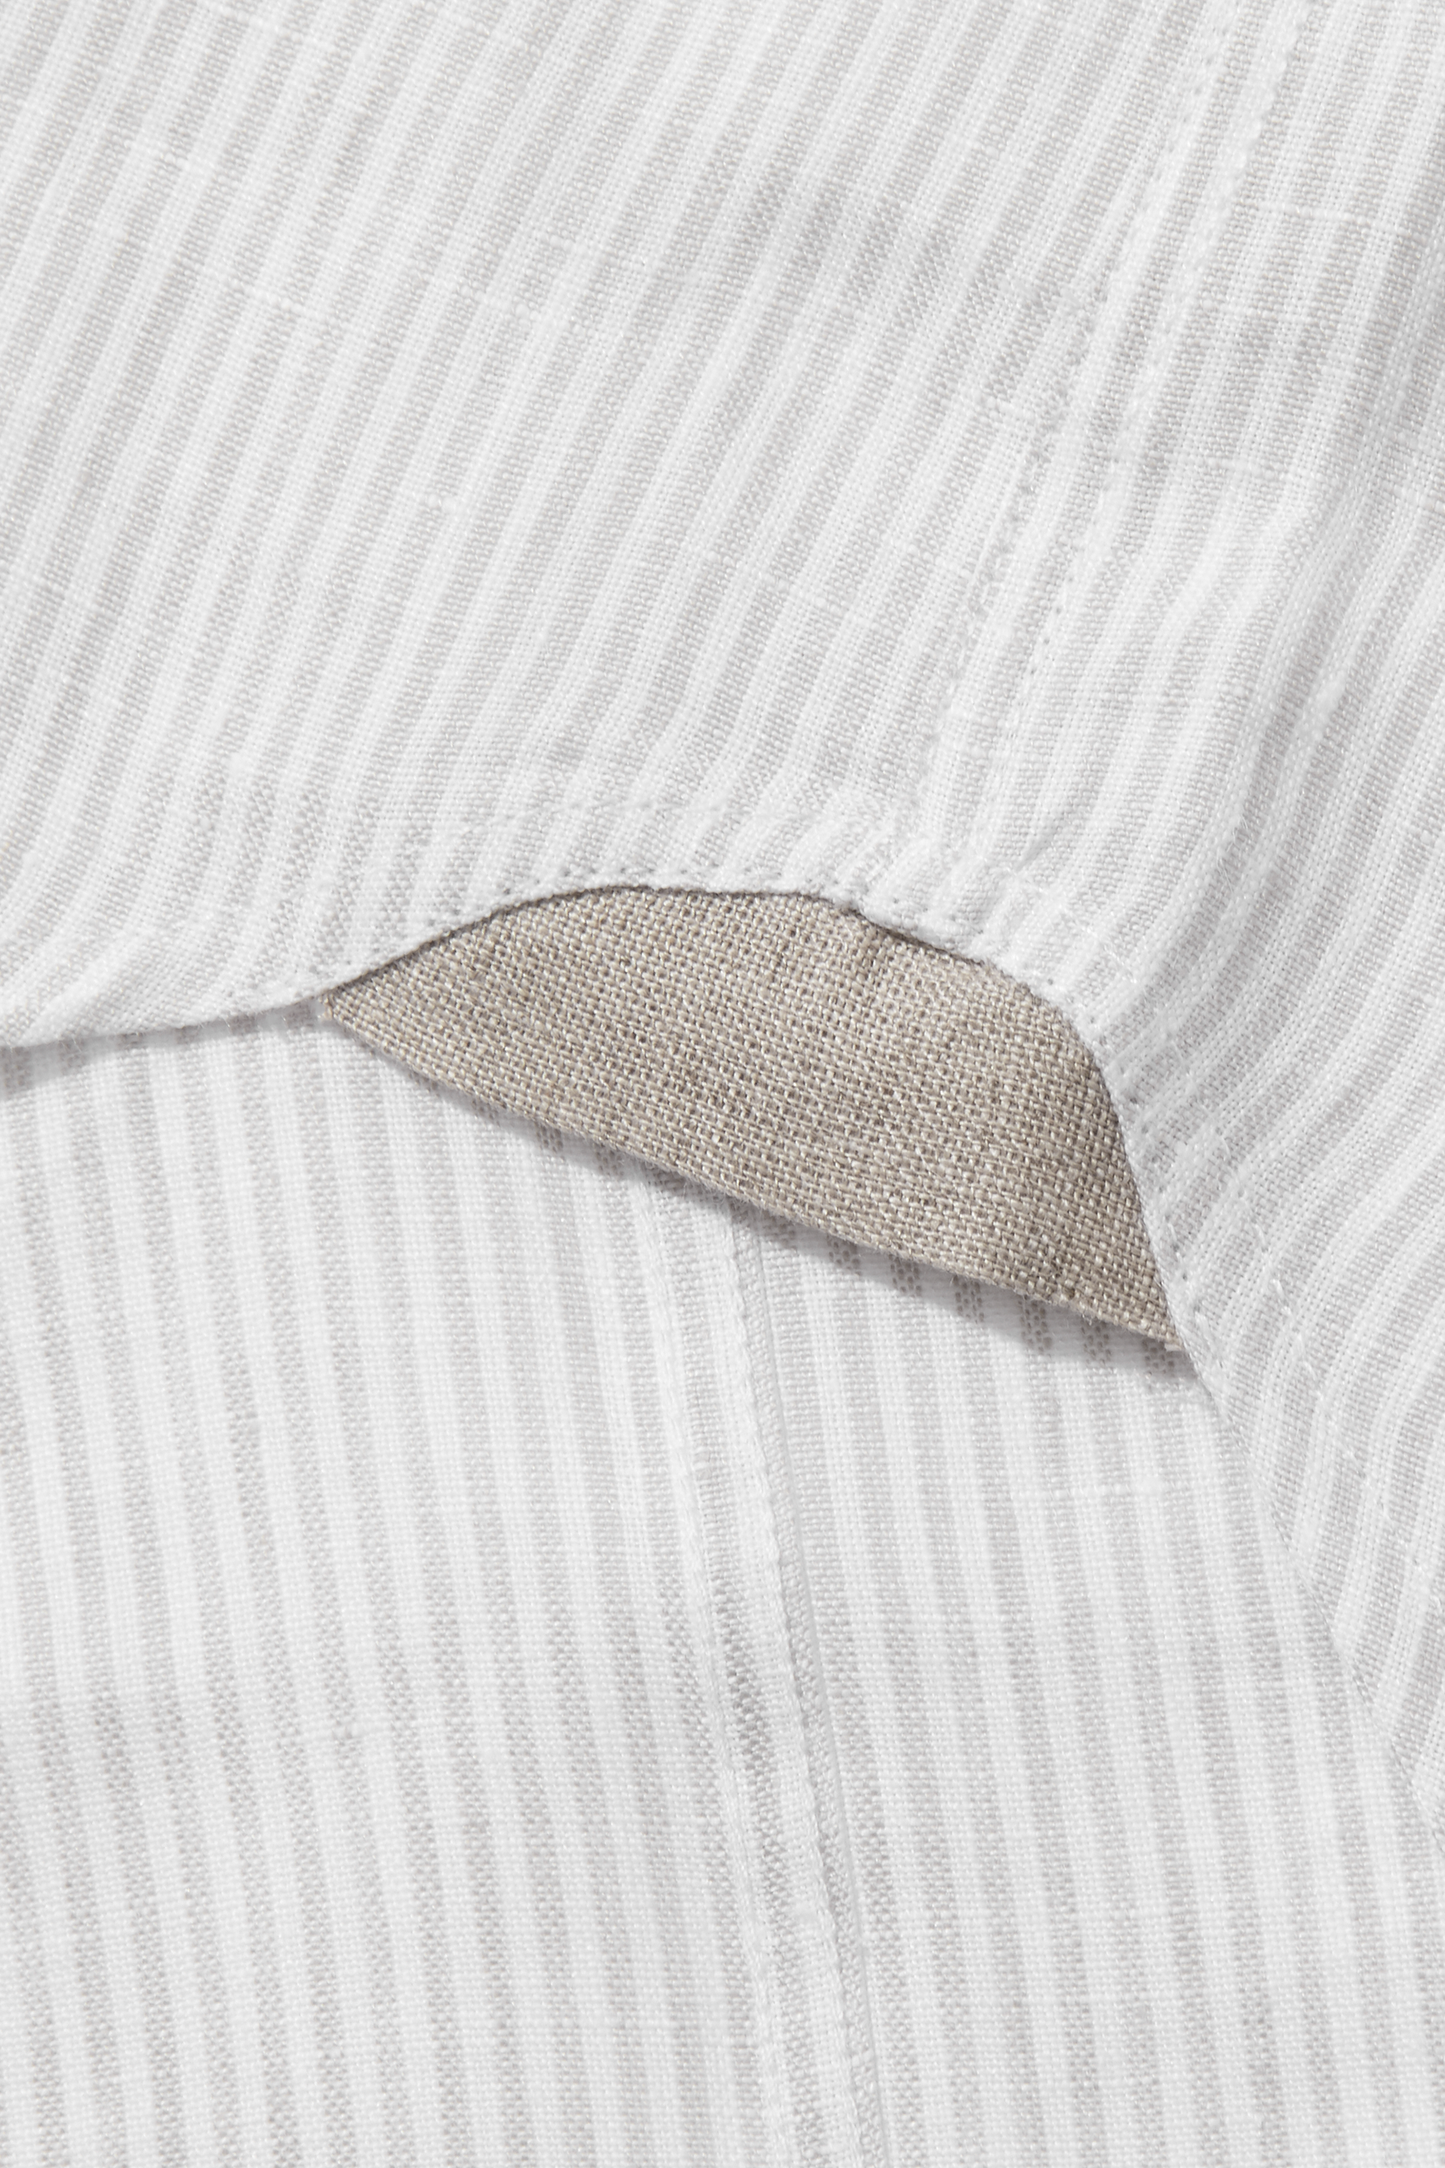 Medium Weight Linen Signature Grey Stripe